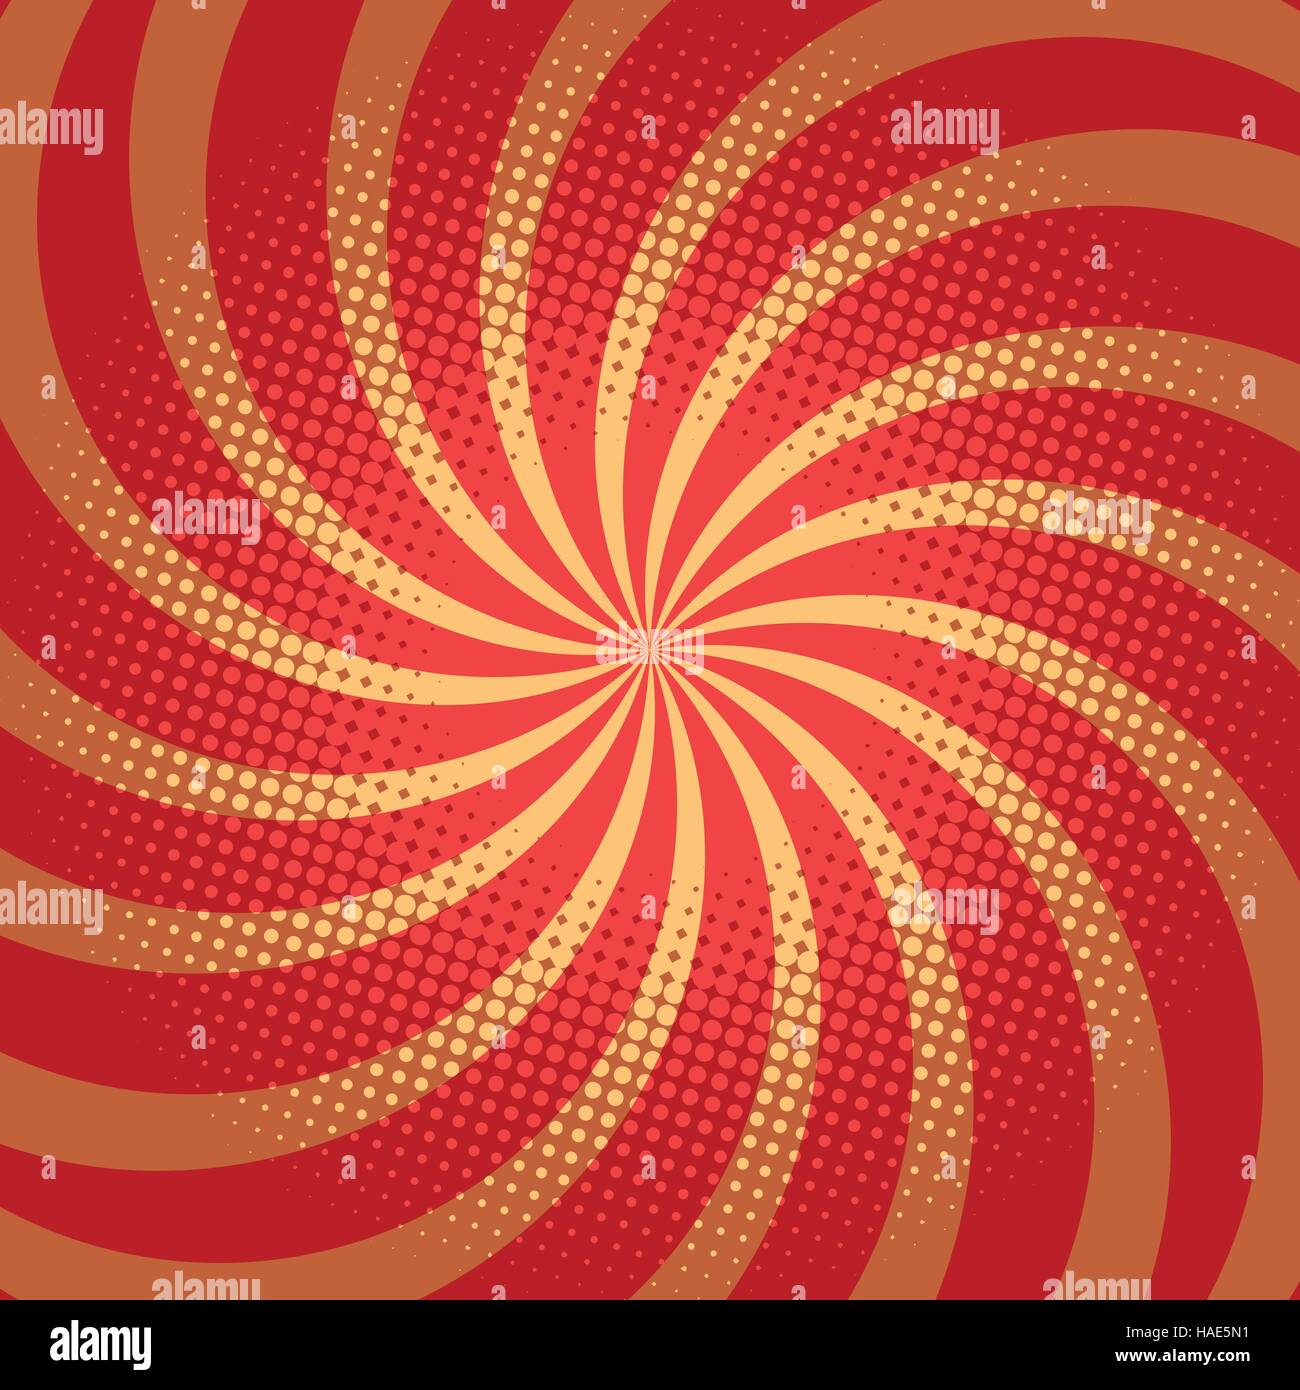 Red spiral pop art background Stock Vector